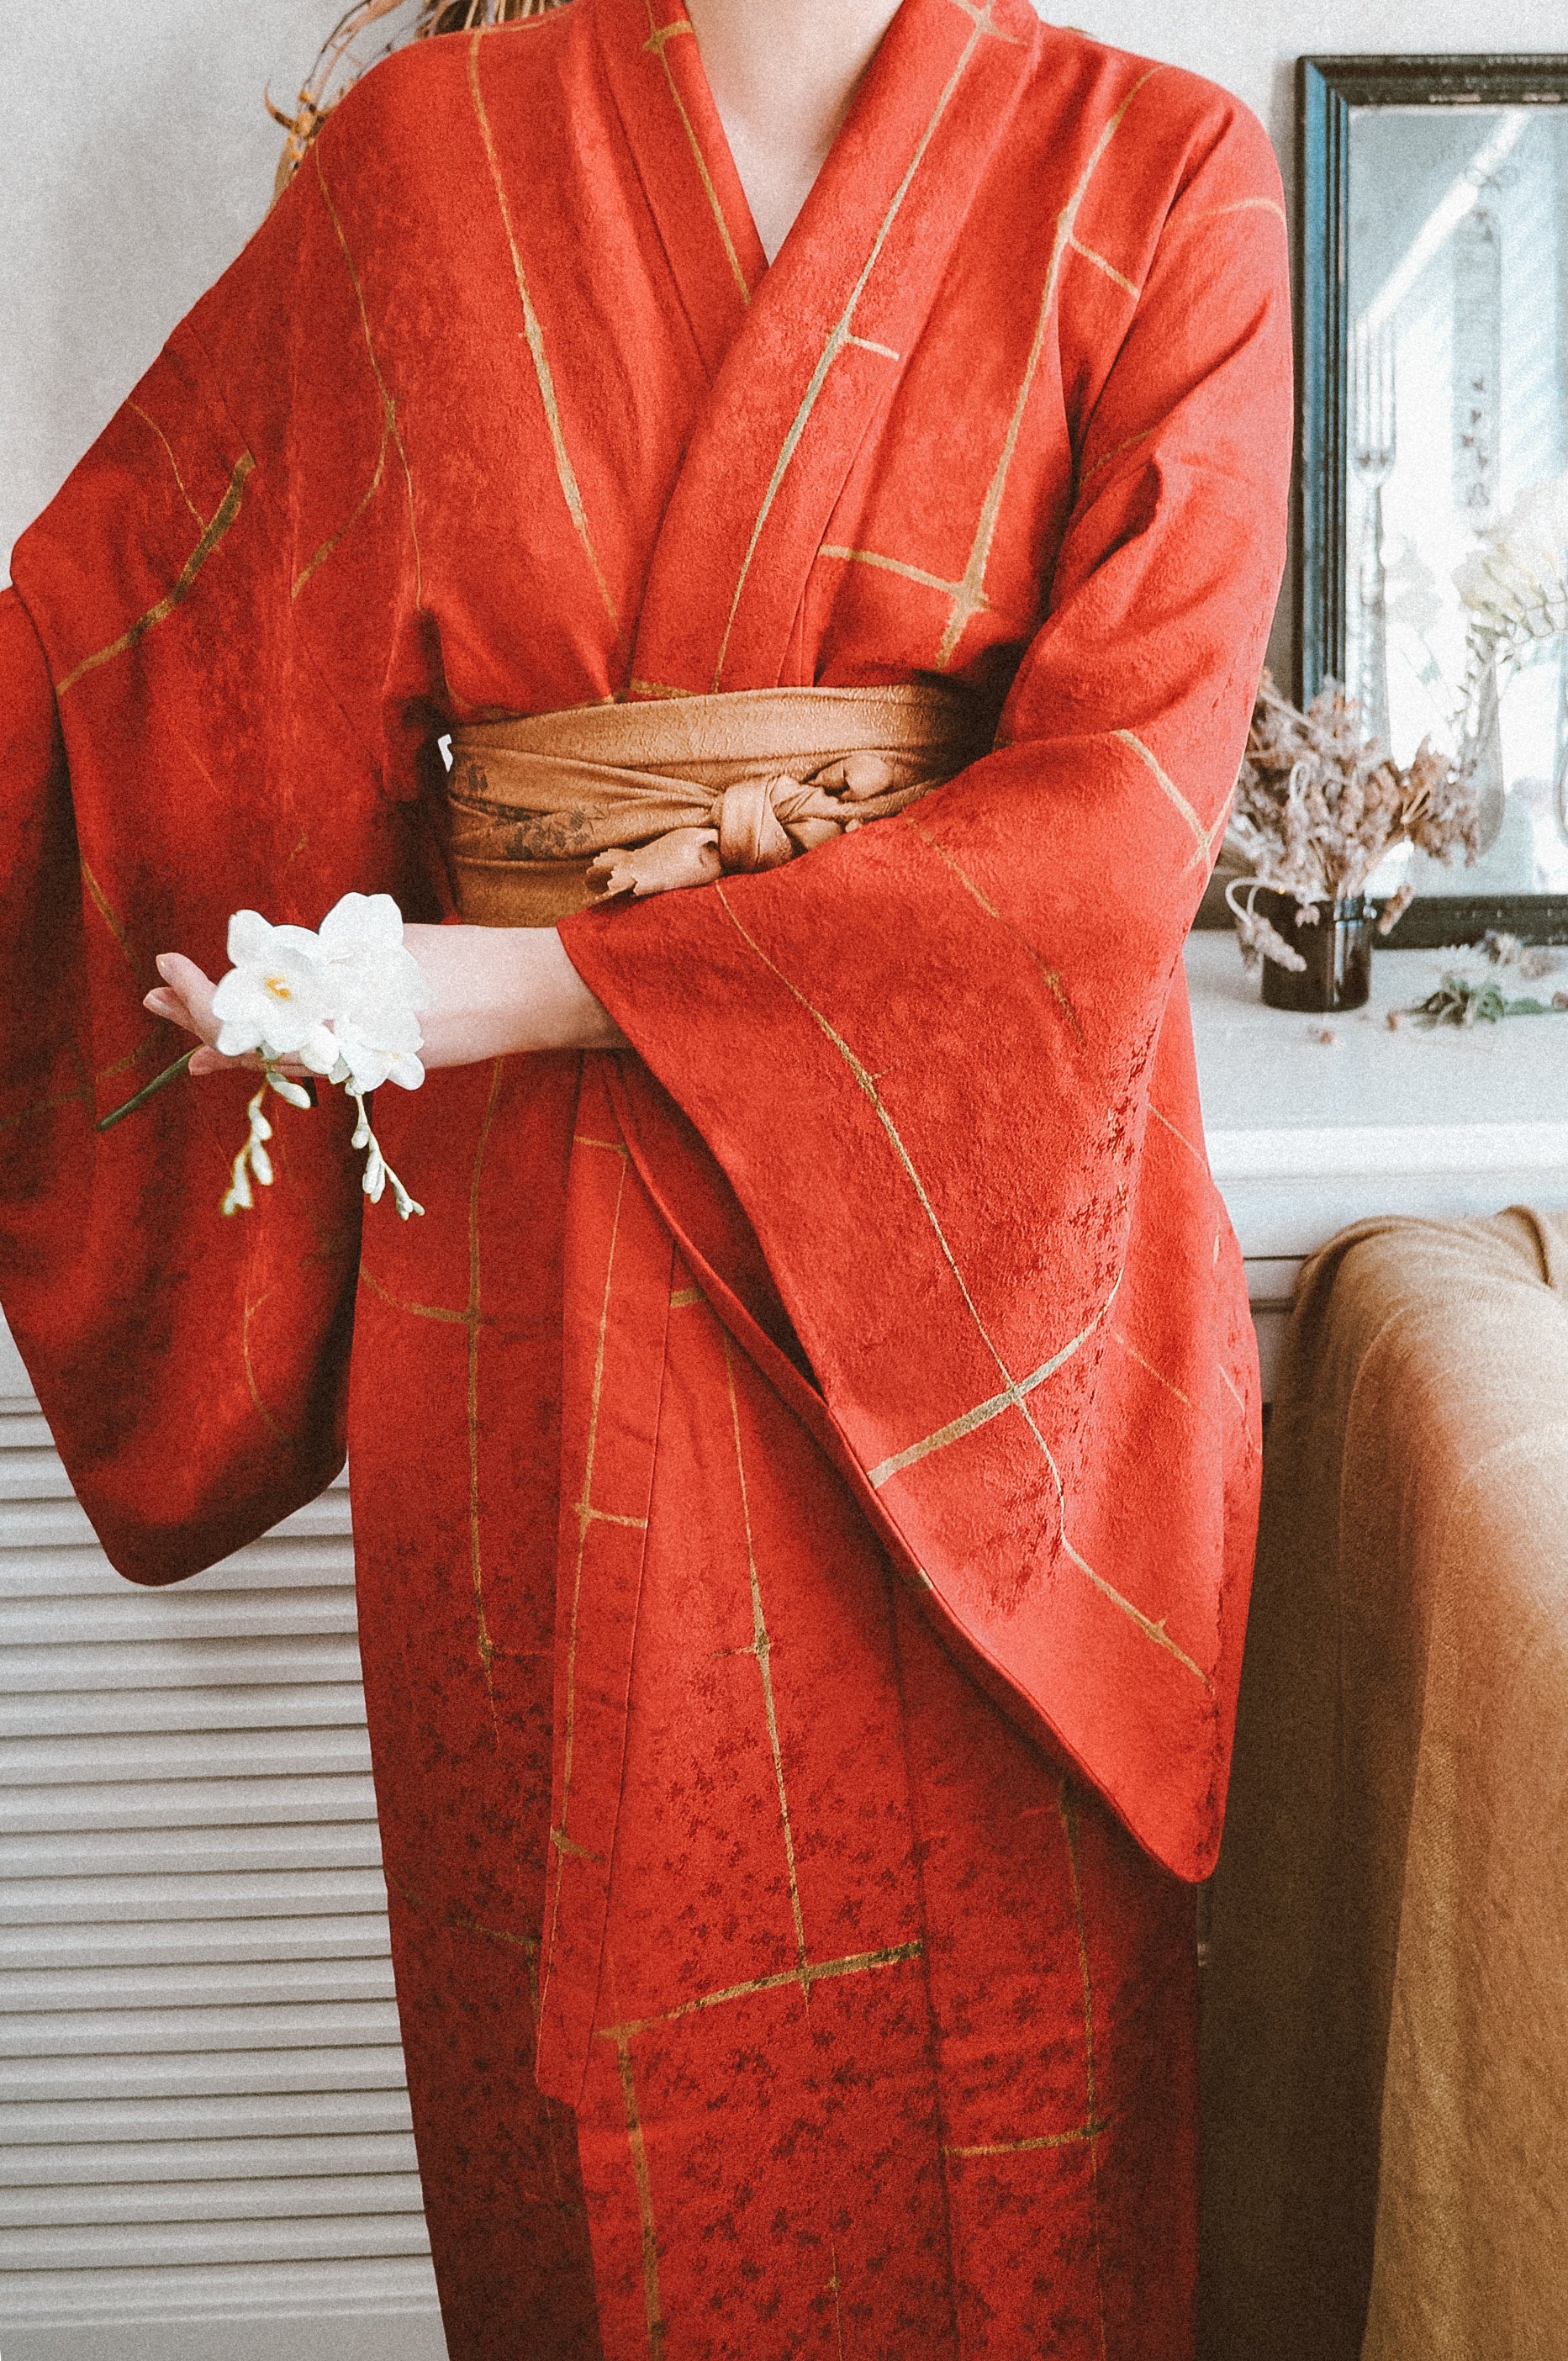 Playa Flamboyan 70s Vintage Kimono Robe